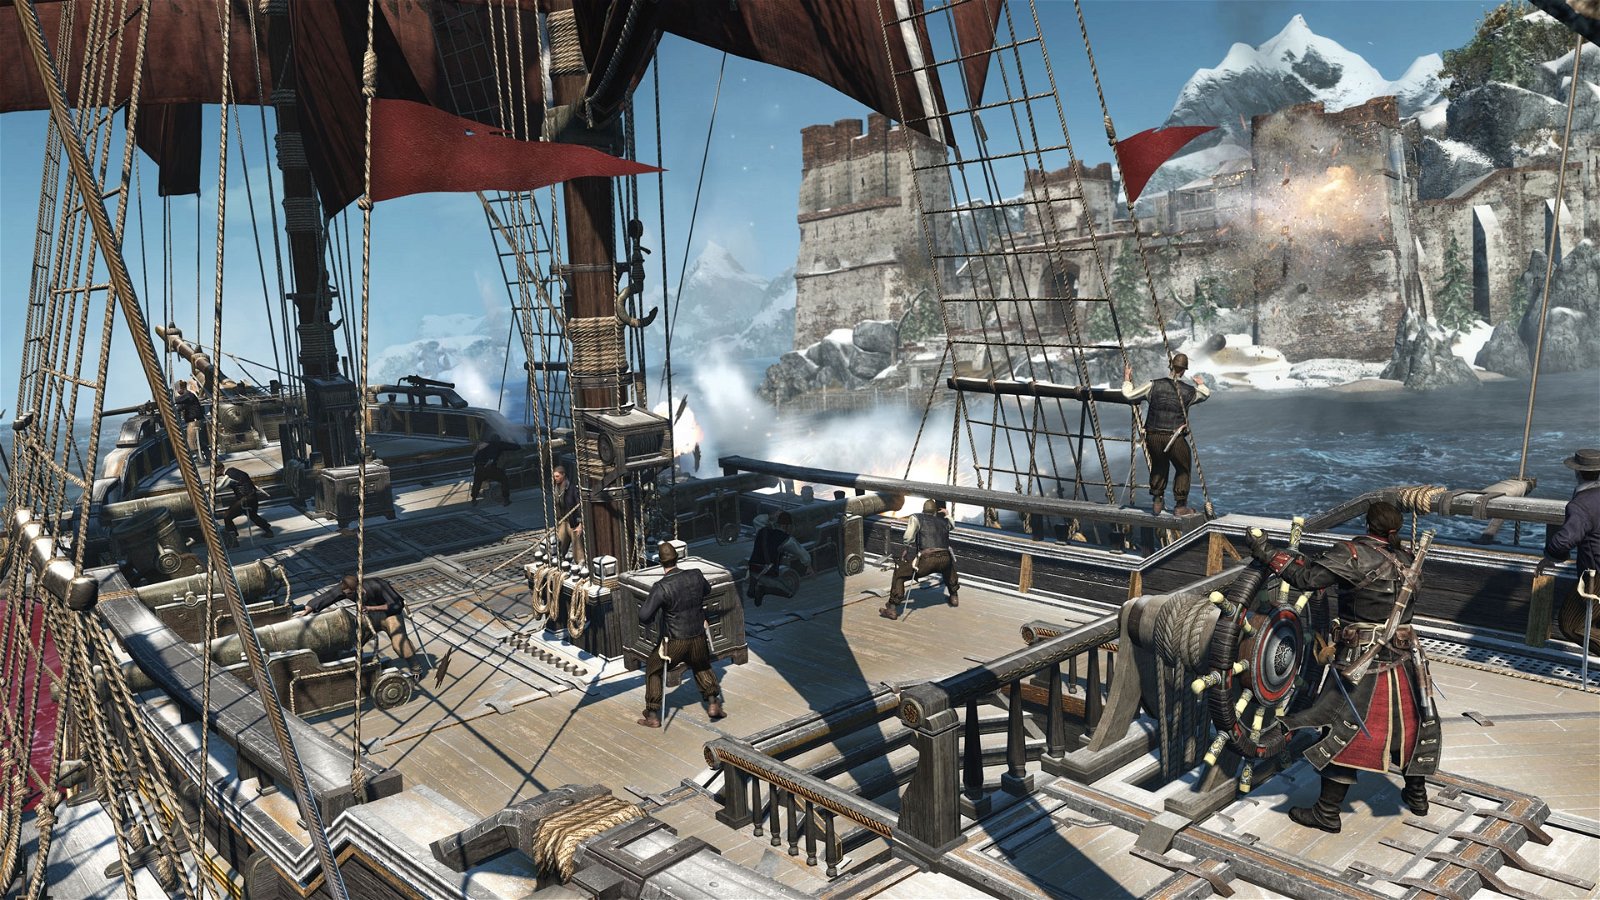 Análisis de Assassin’s Creed Rogue: Remastered - La otra cara de la moneda